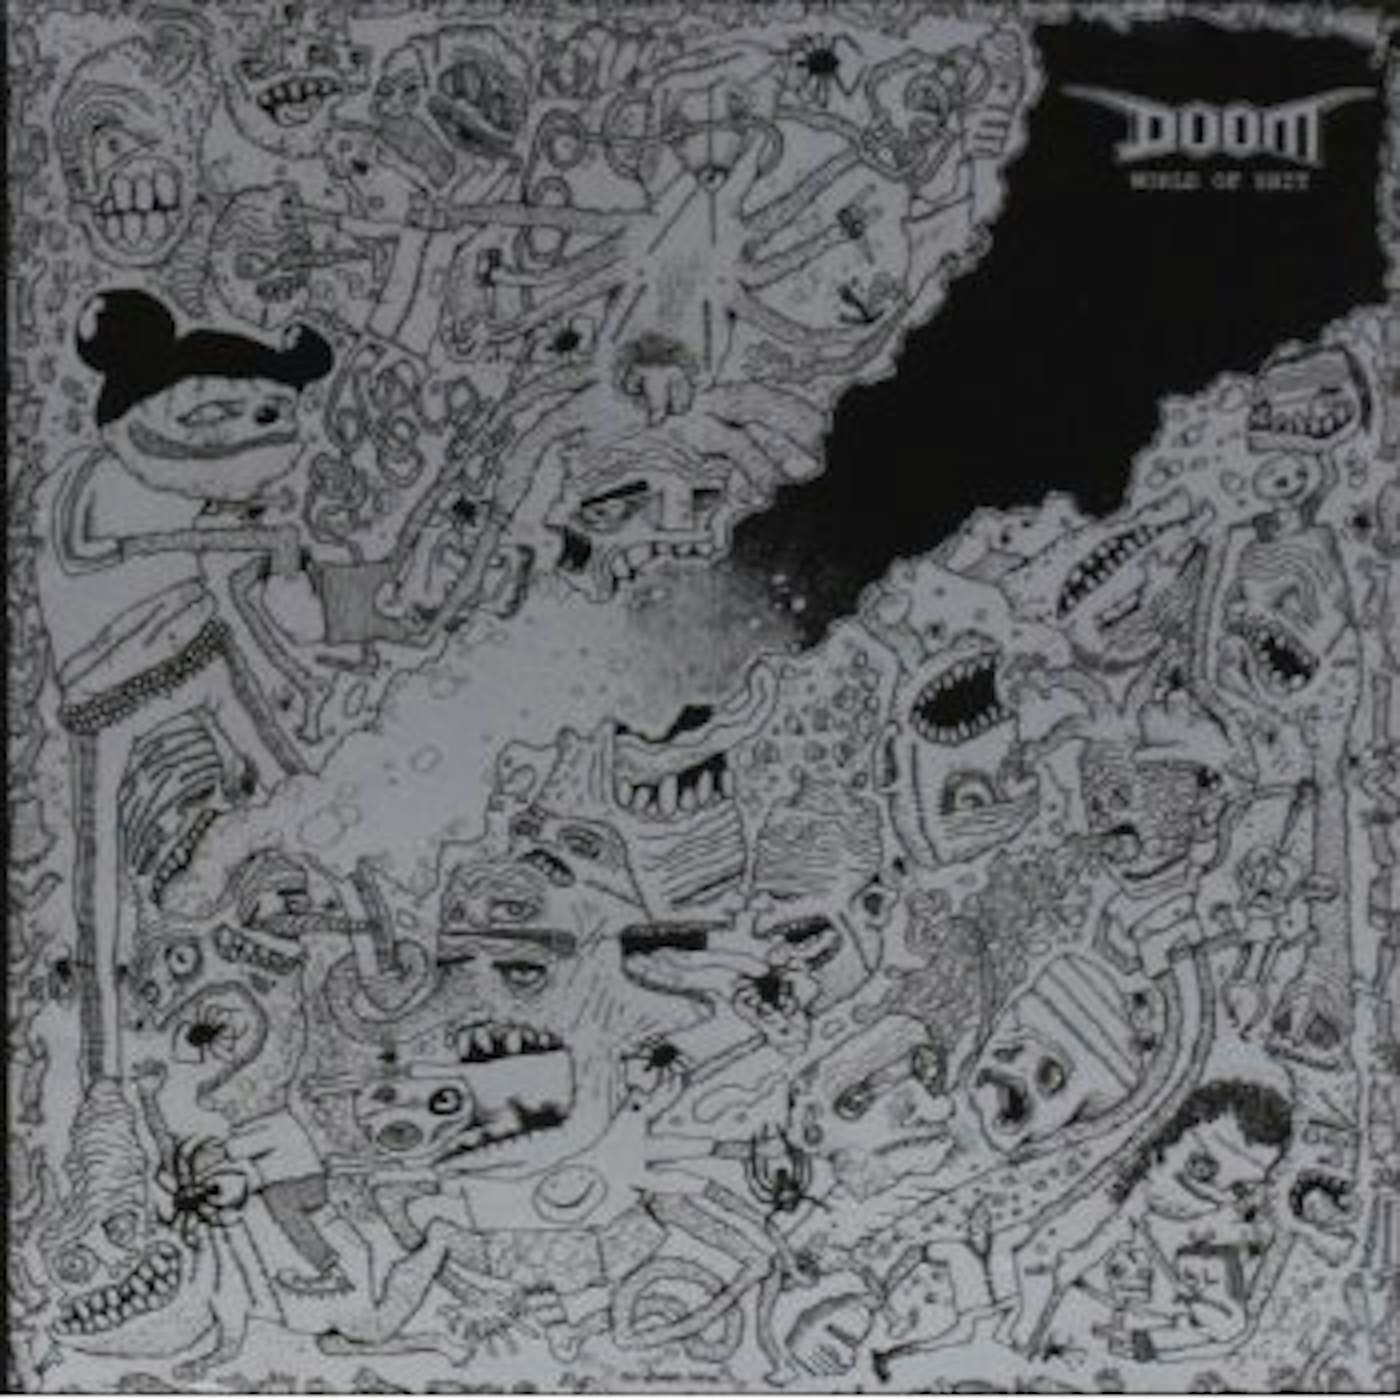 Doom WORLD OF SHIT CD